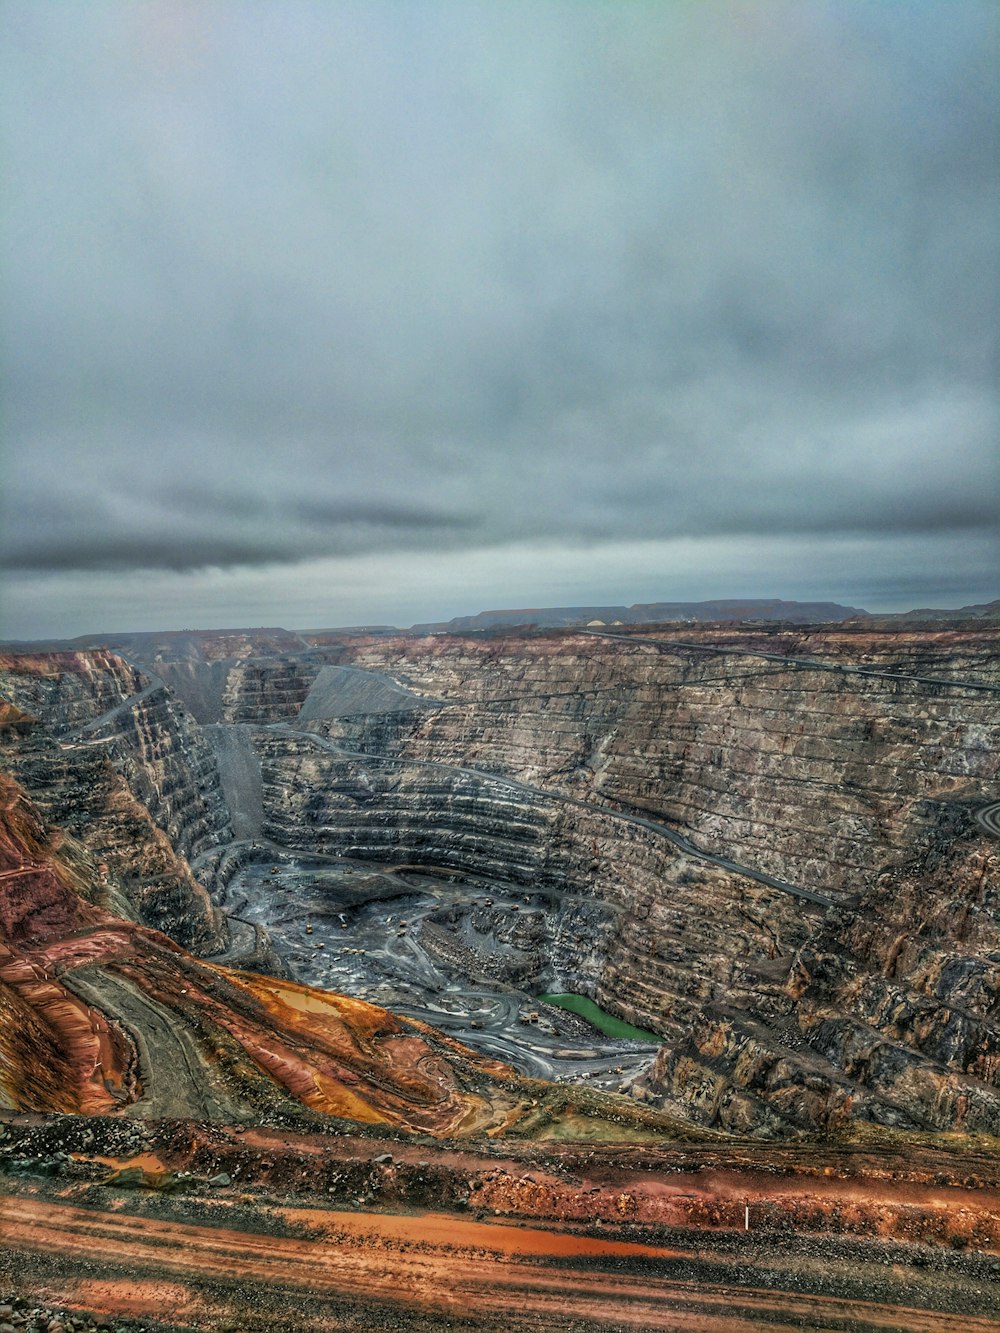 Prospecting Australia's Deepest Underground Coal Mine - Mining